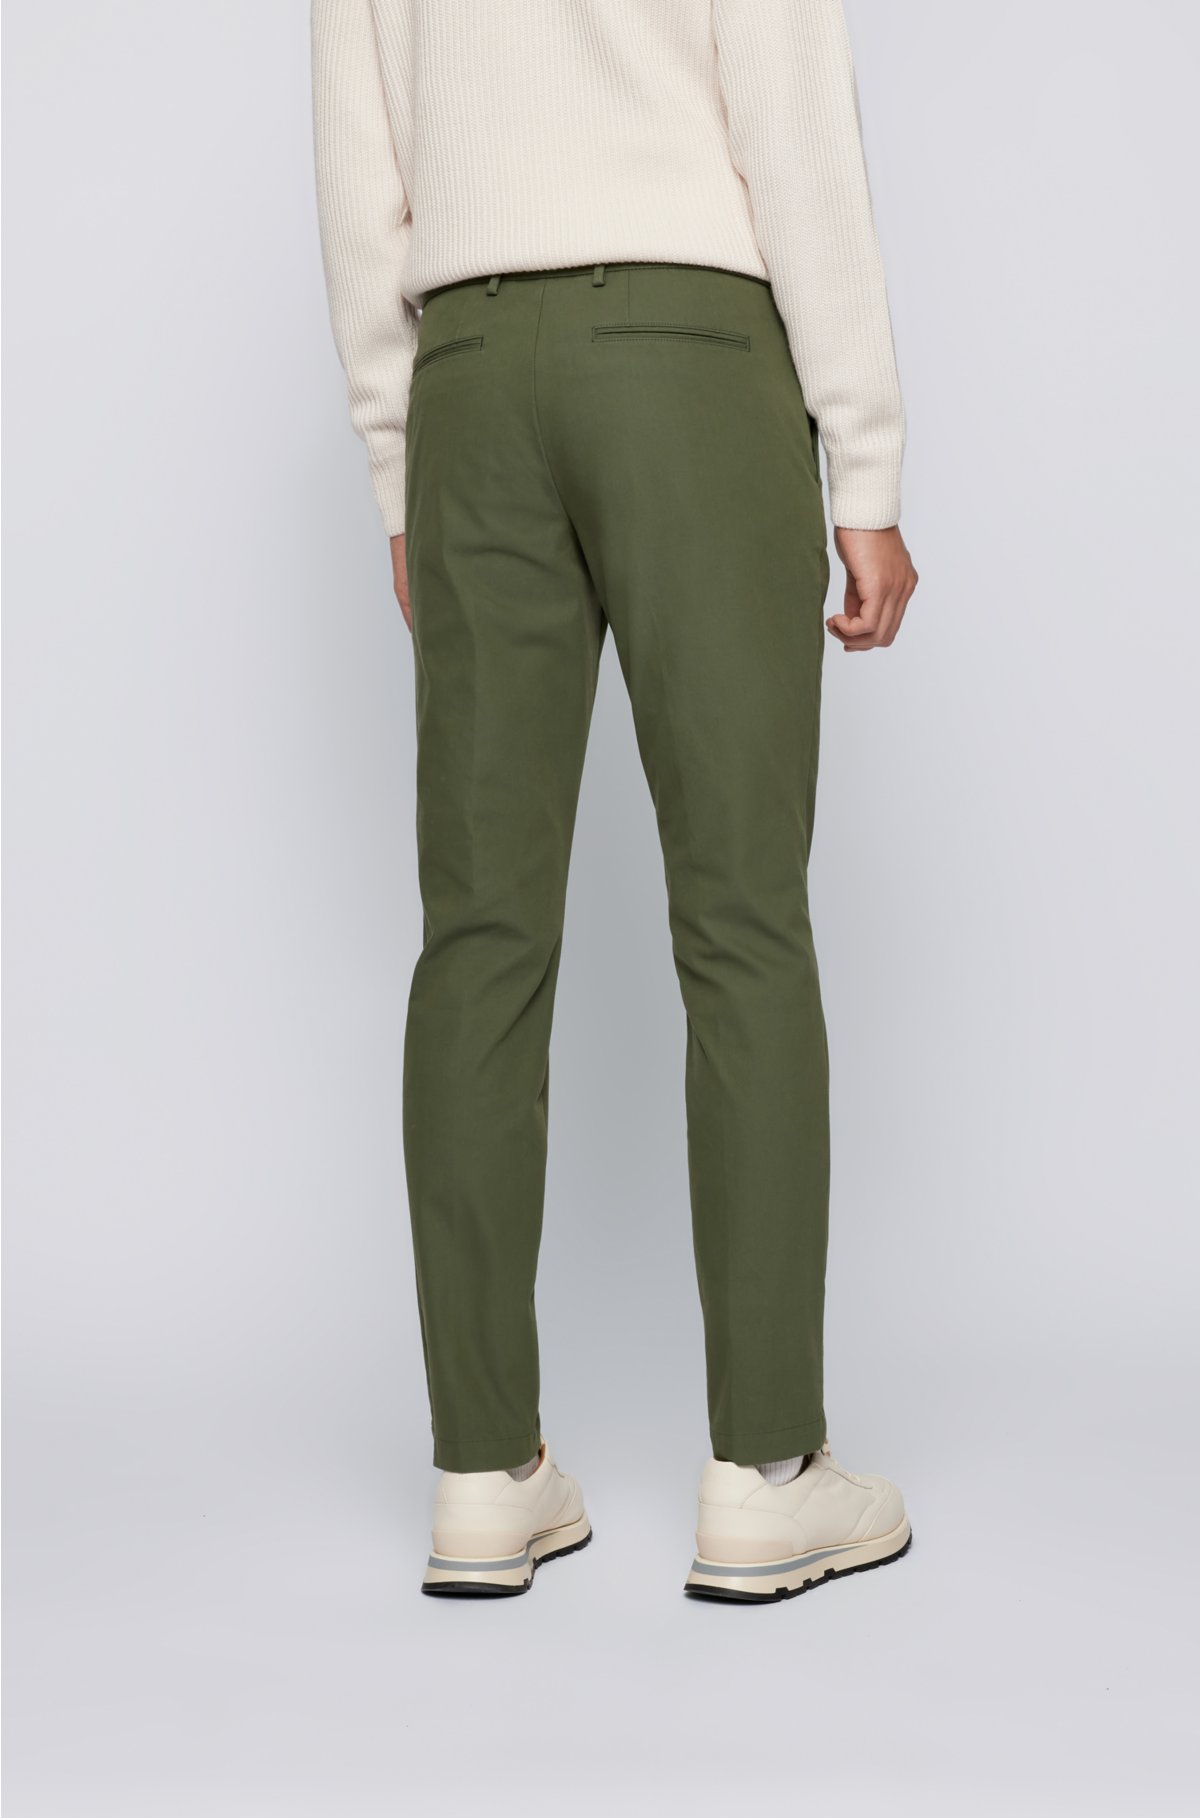 Isaac hage jernbane BOSS - Slim-fit pants in a cotton blend